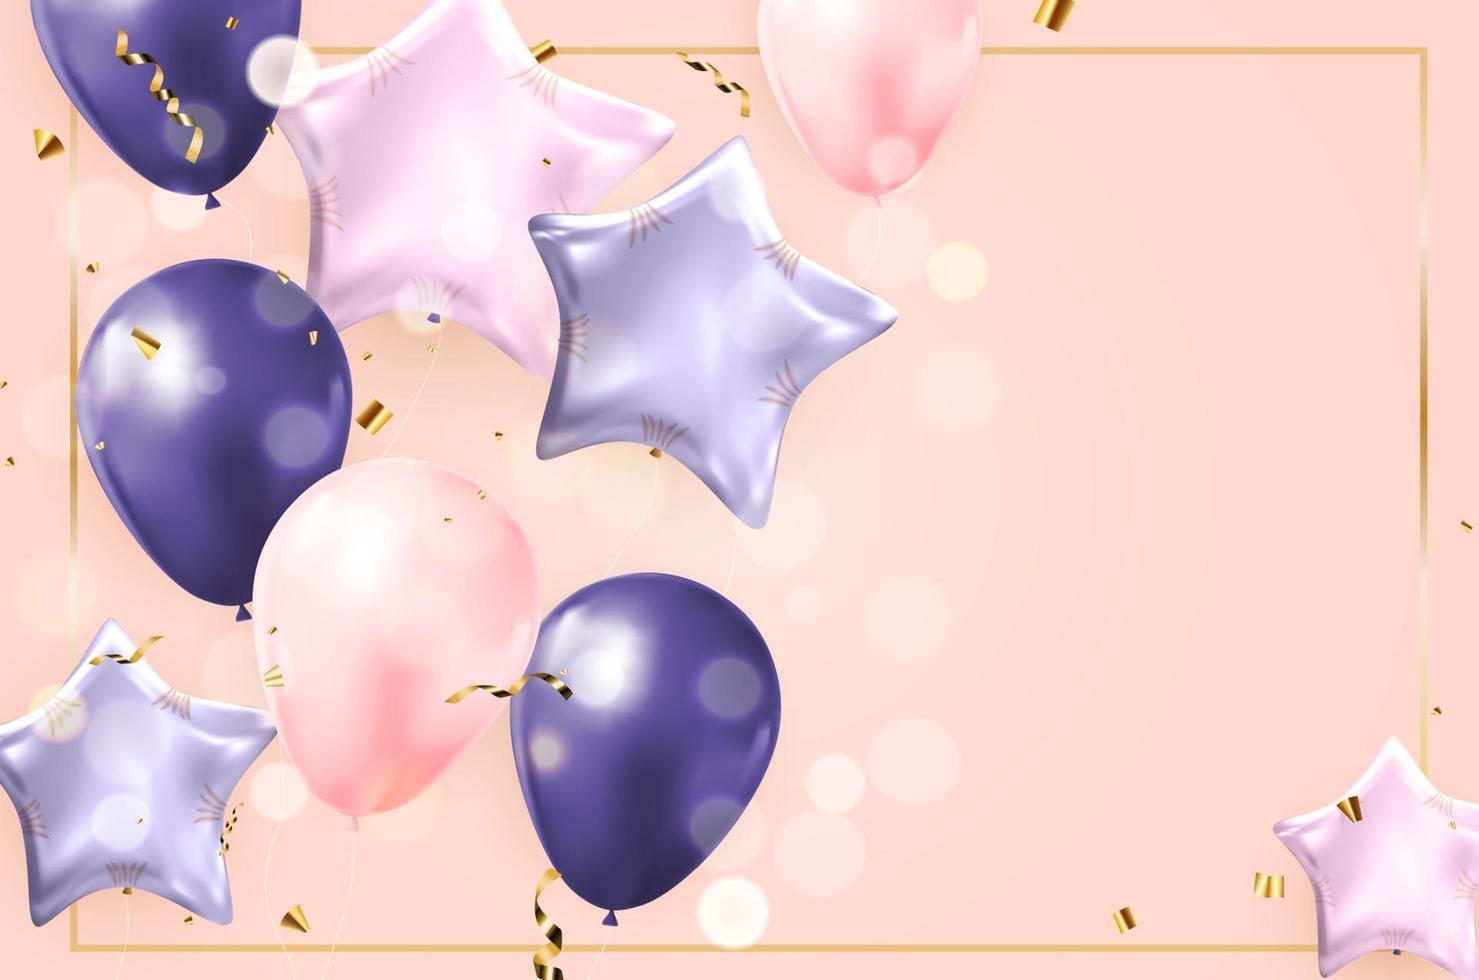 Happy Birthday congratulations banner design with Confetti, Balloons vector